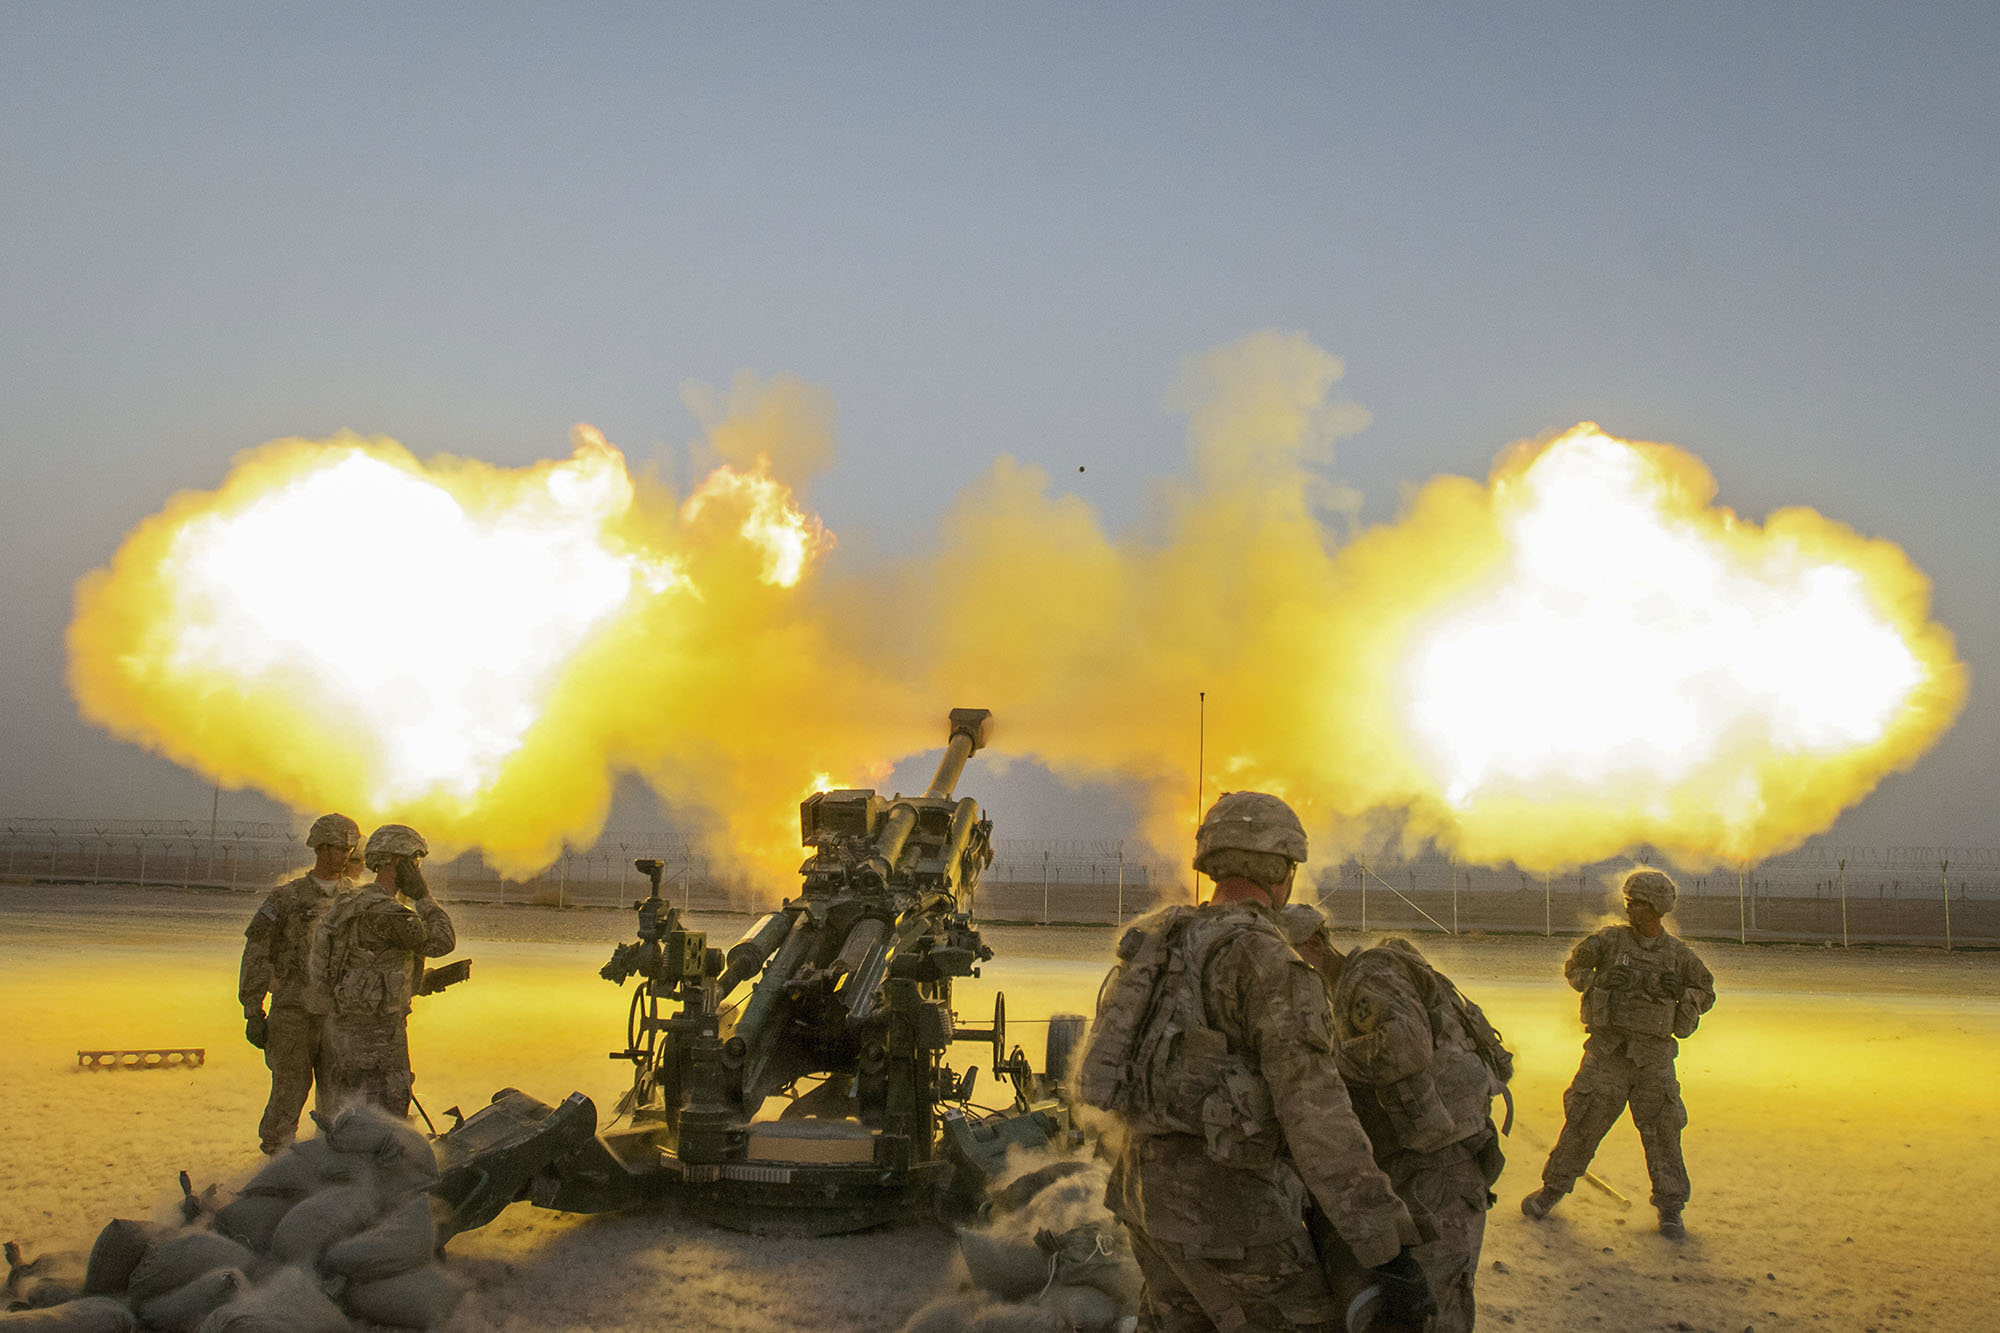 US Service Men firing a cannon on a training field